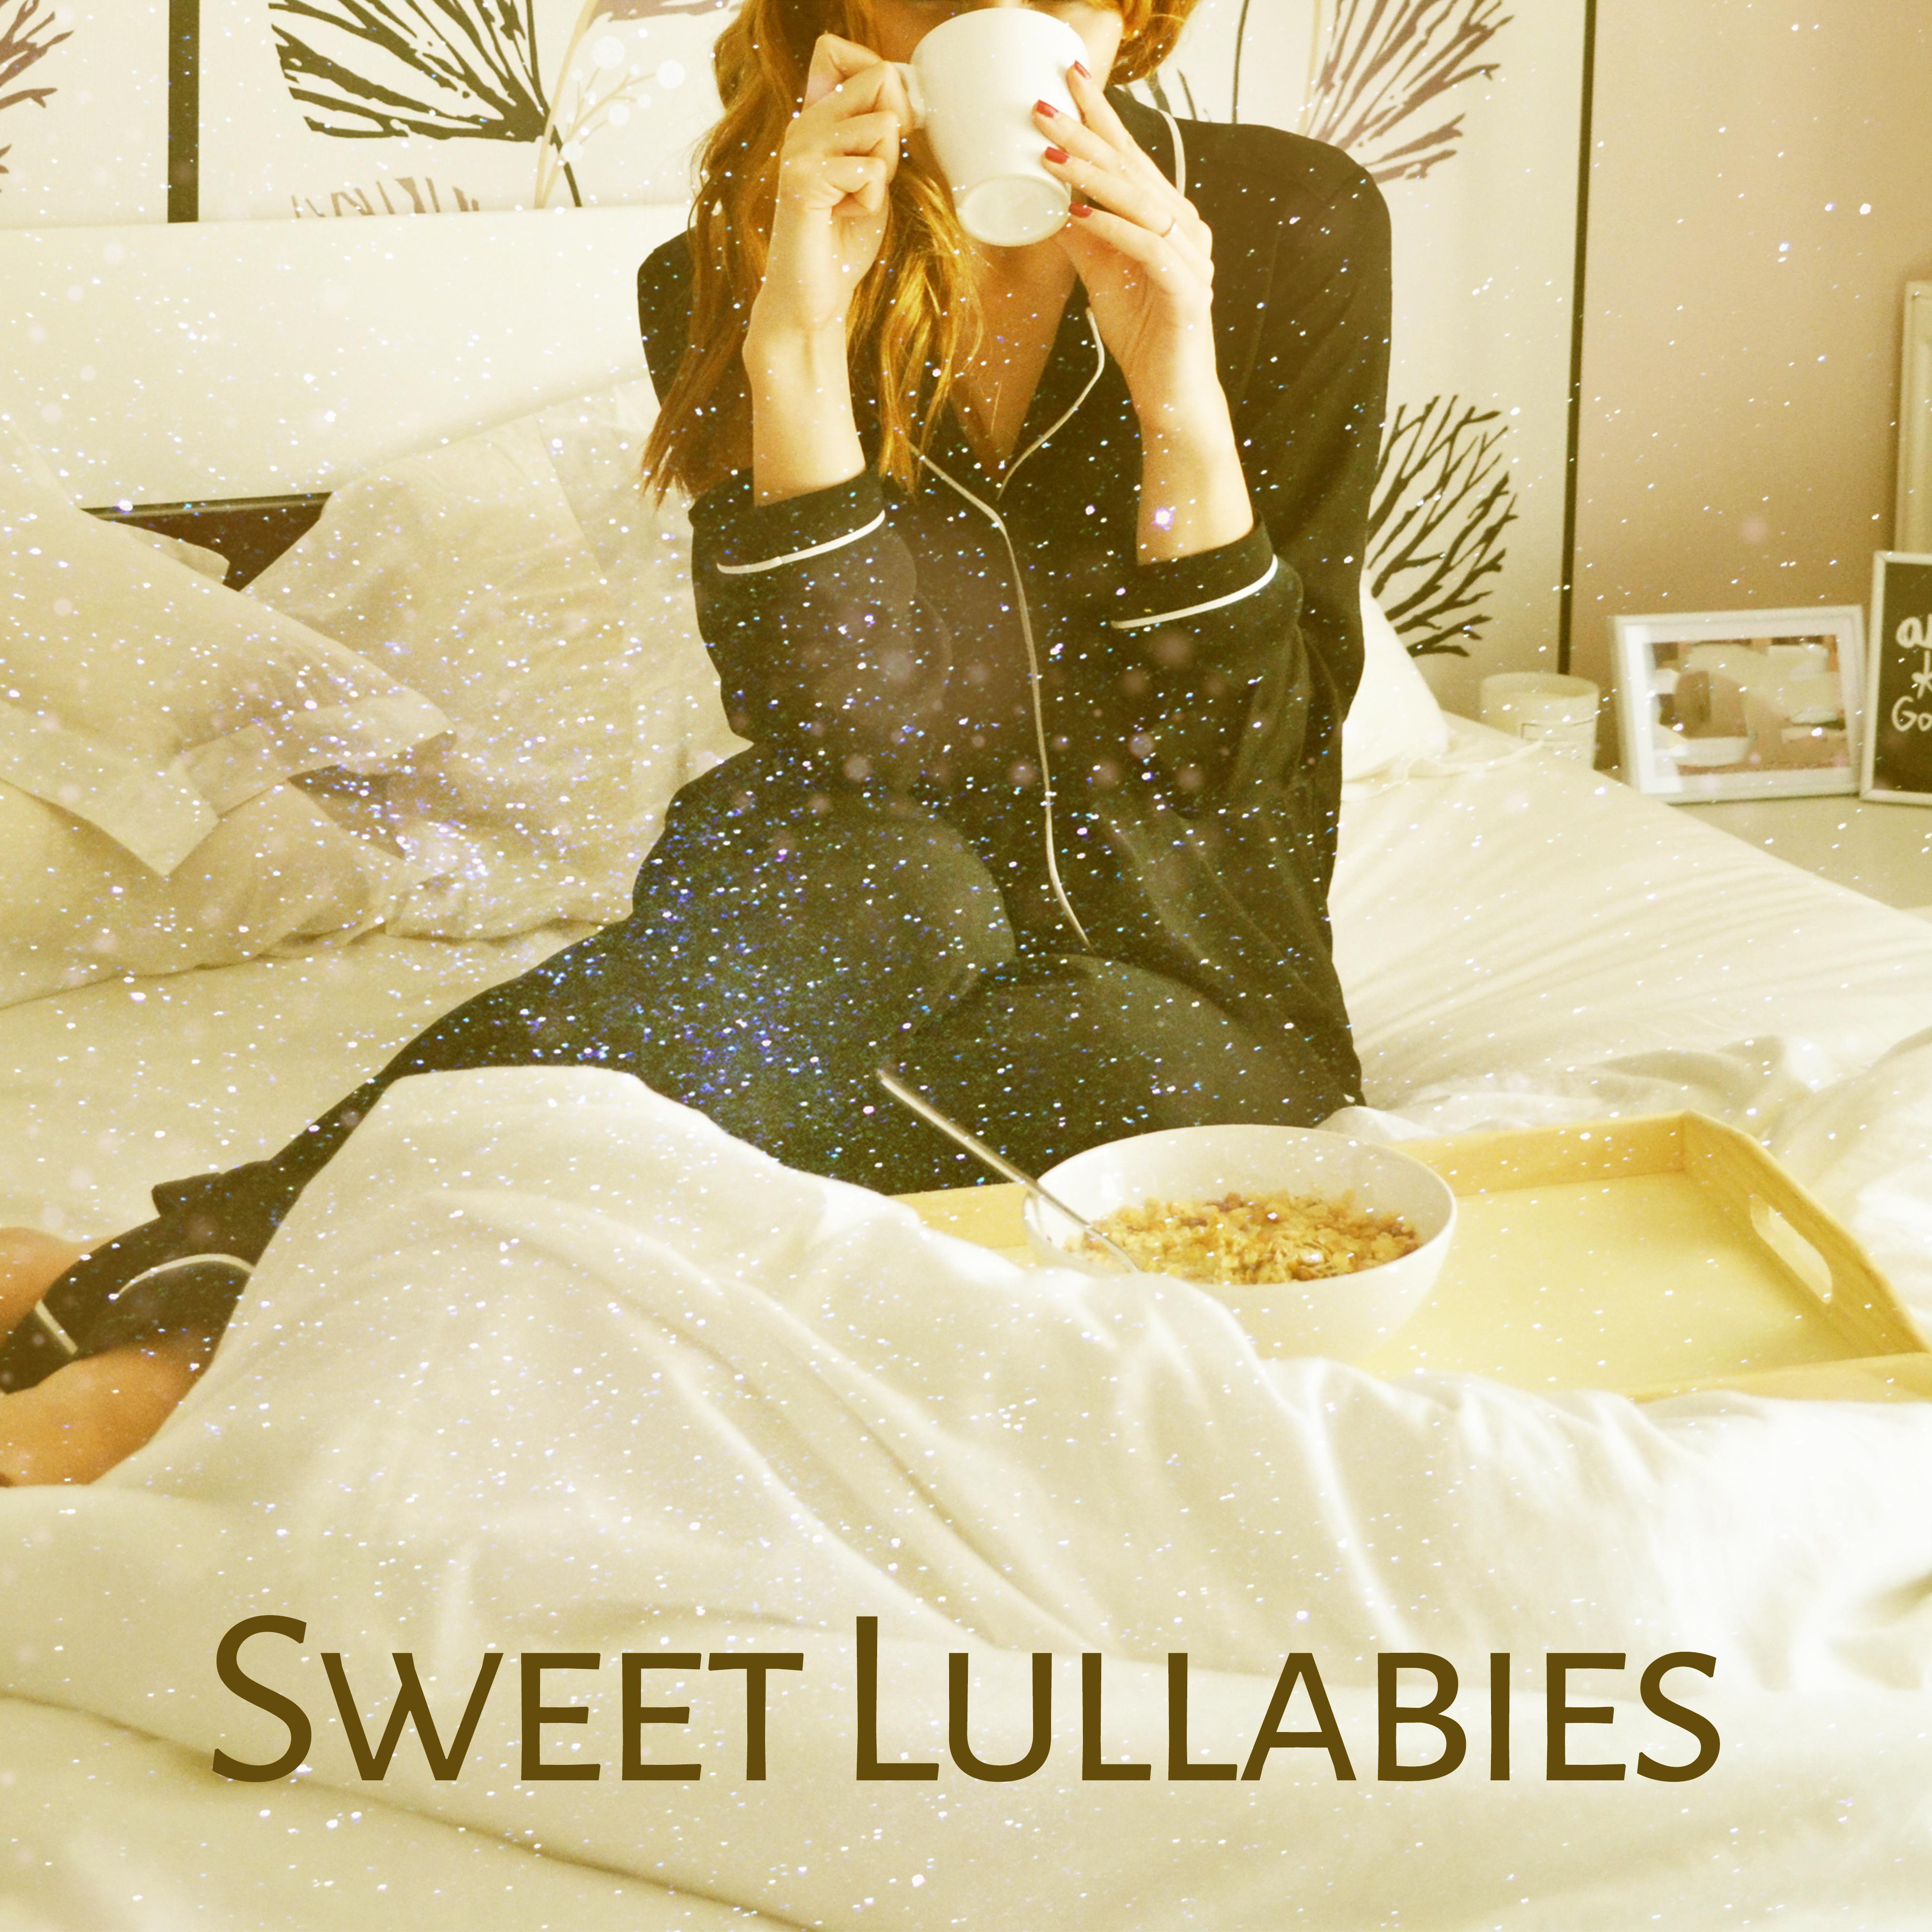 Sweet Lullabies – Calming Nature Sounds, Relaxing Music, Music for Falling Asleep, Good Night, Easy Sleep